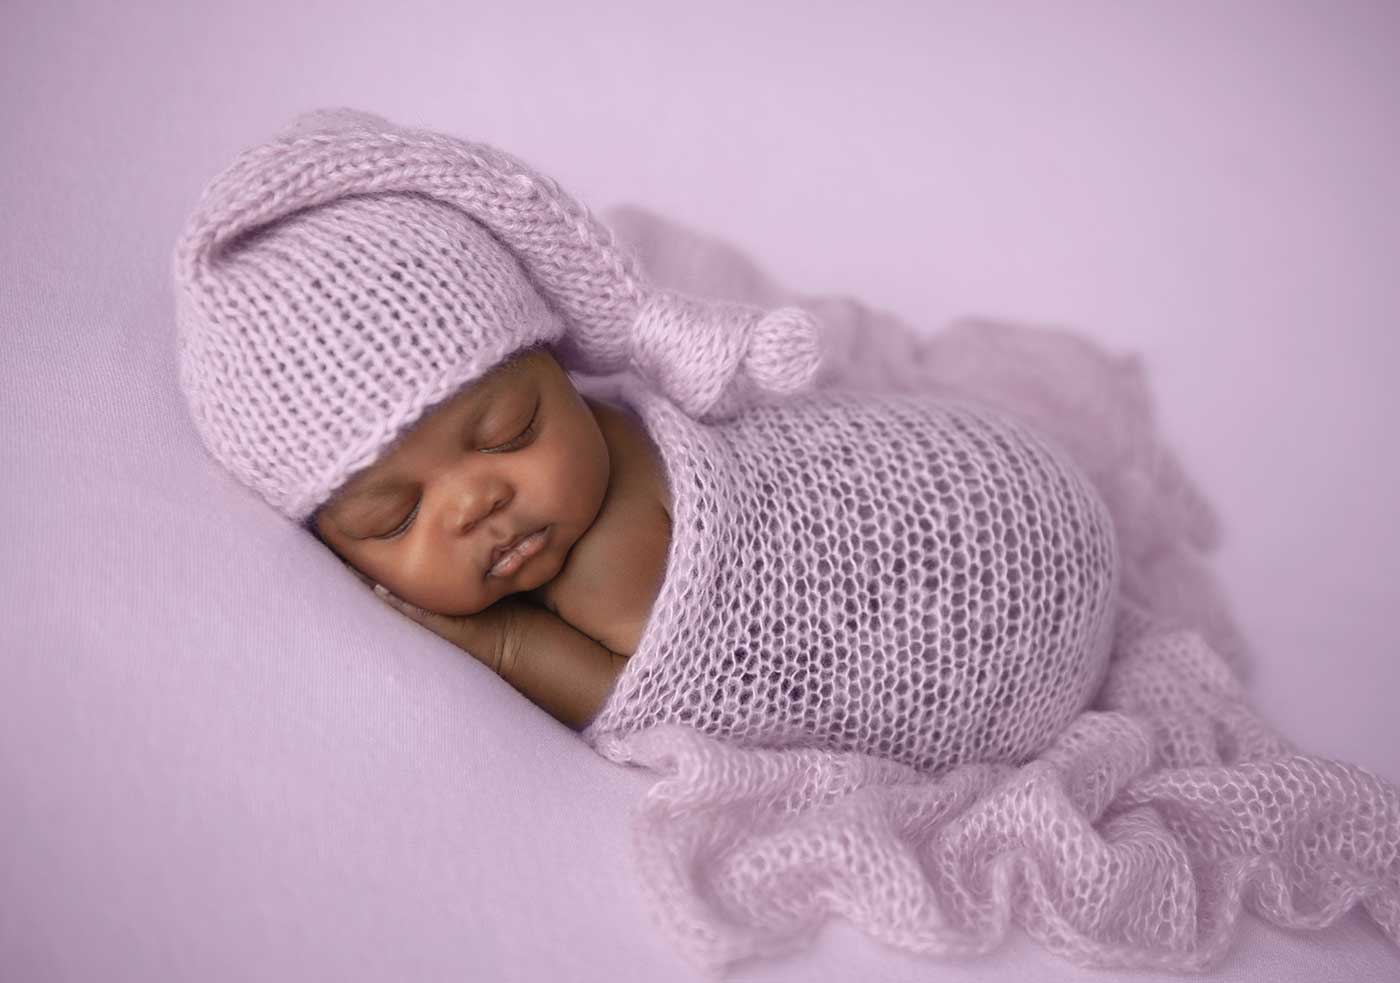 Infant sleeping peacefully on a purple blanket